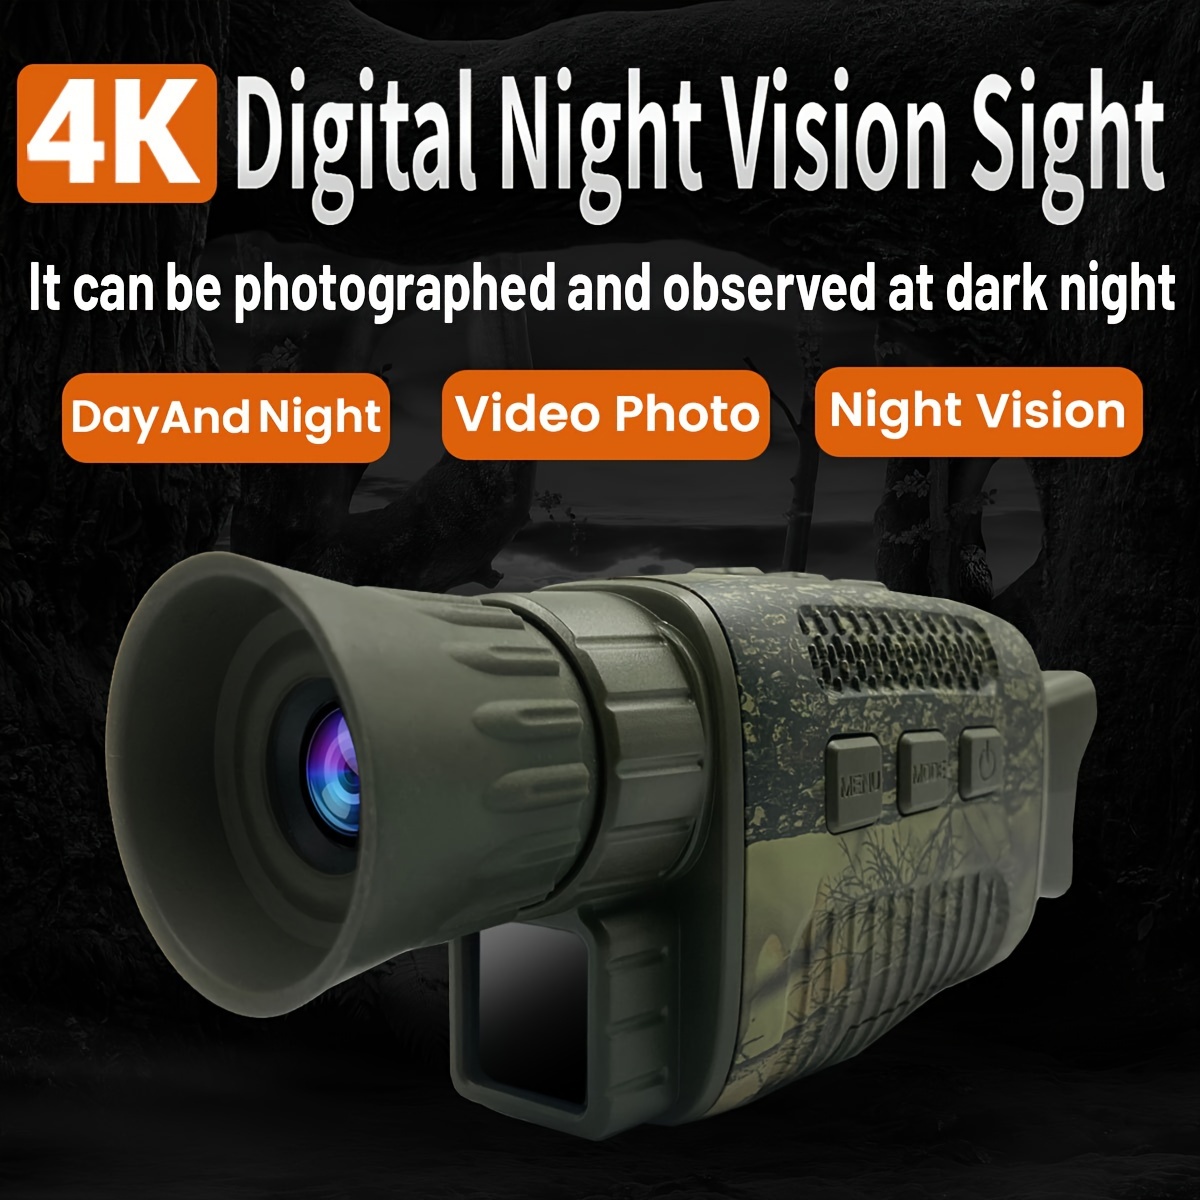 Ir vision nocturne infrarouge infrarouge lunette de vision nocturne  infrarouge numérique monoculaire dispositif monotube photo/vidéo